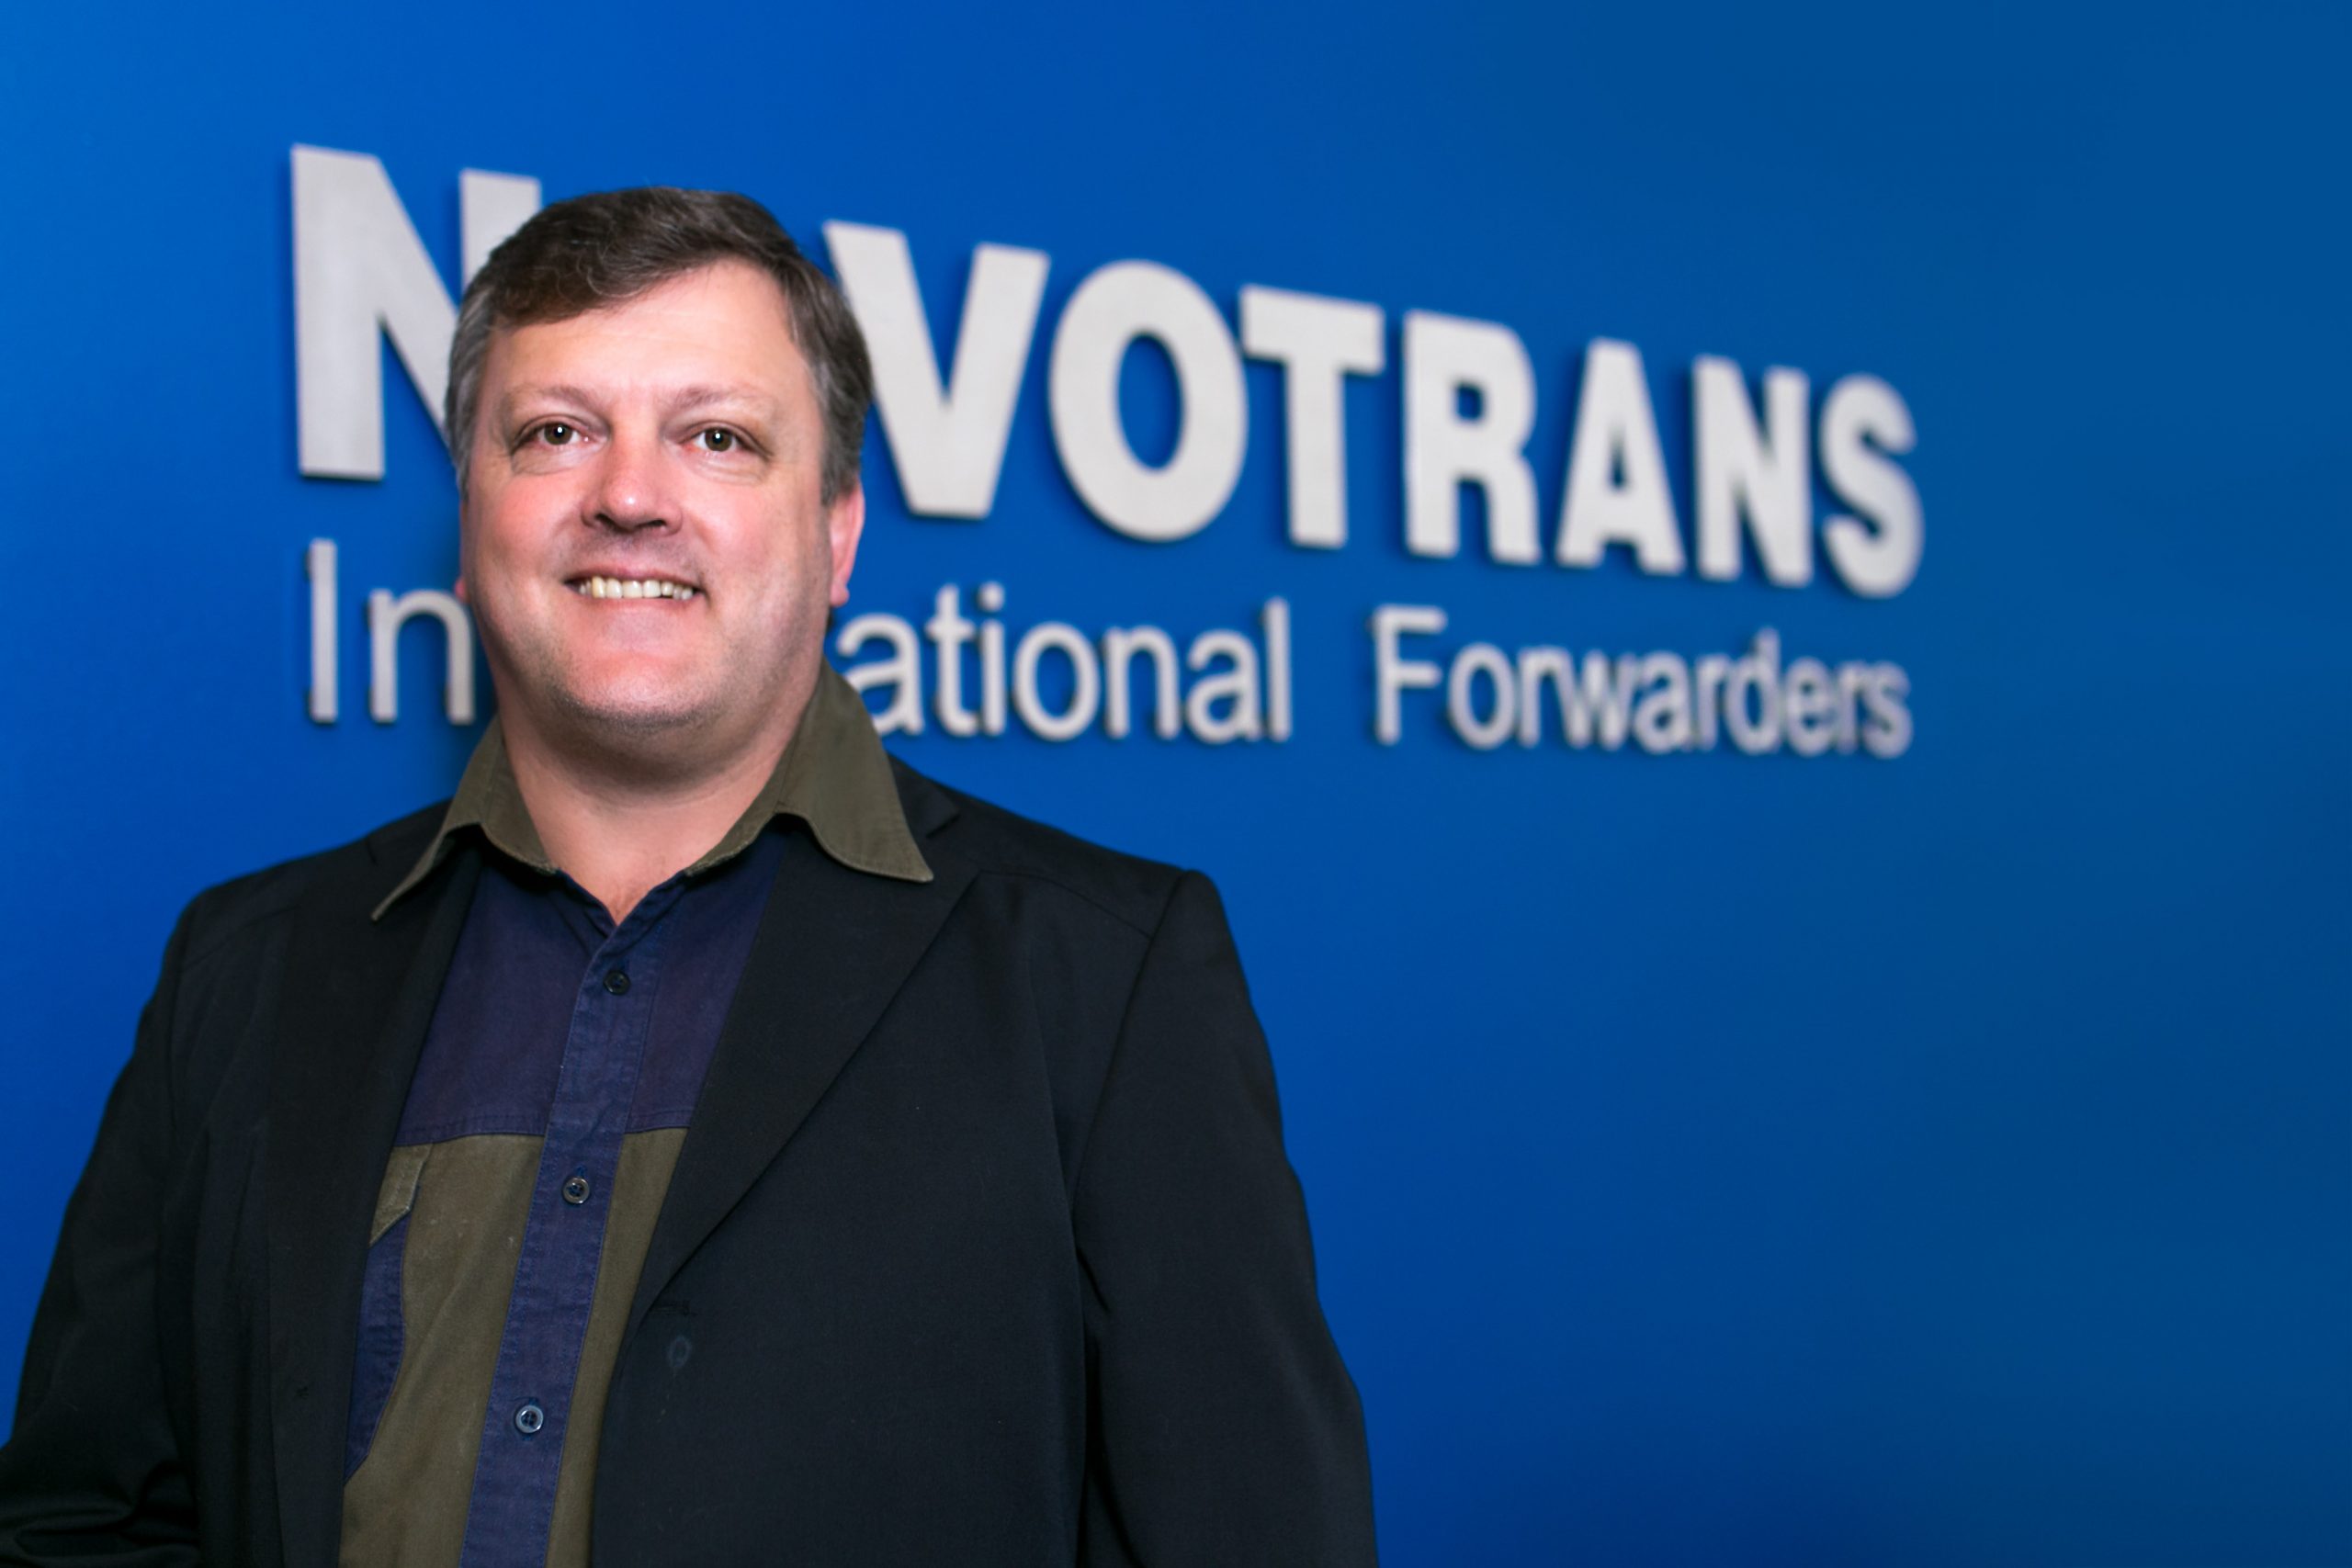 Novotrans Freight Forwarding